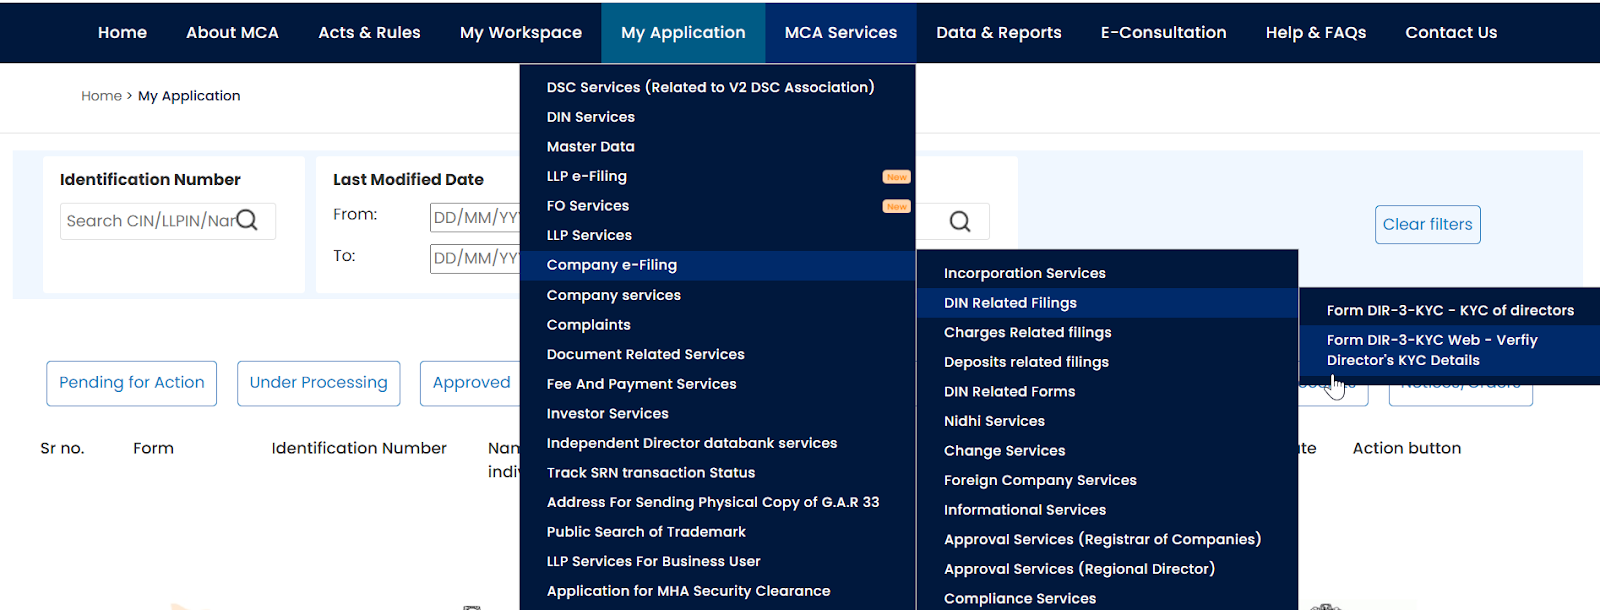 Link to DIR-3-KYC Web Form. MCA Services --> Company e-Filing --> DIN Related Filings --> Form DIR-3-KYC Web 